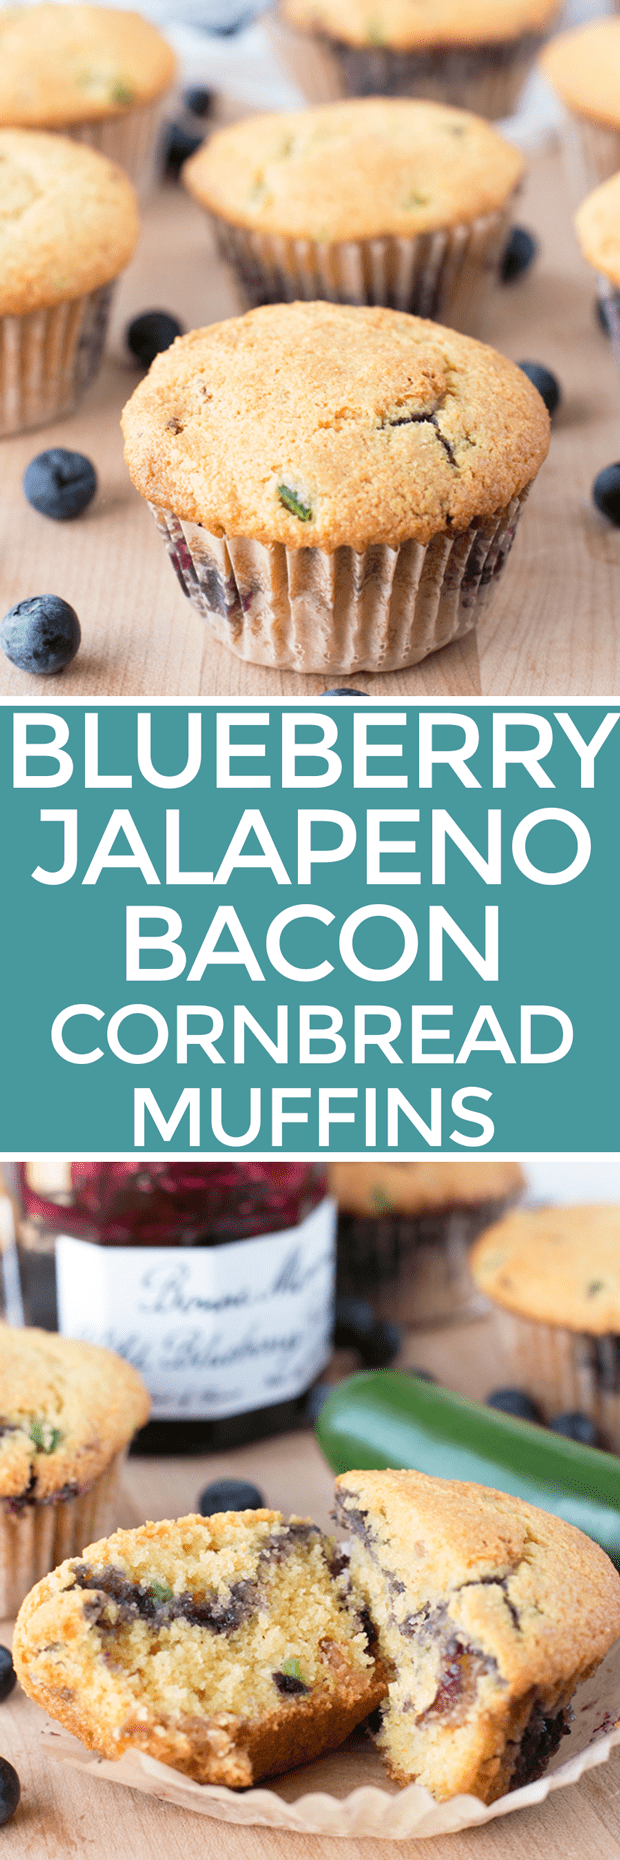 Blueberry Jalapeno Bacon Cornbread Muffins | cakenknife.com #breakfast #brunch